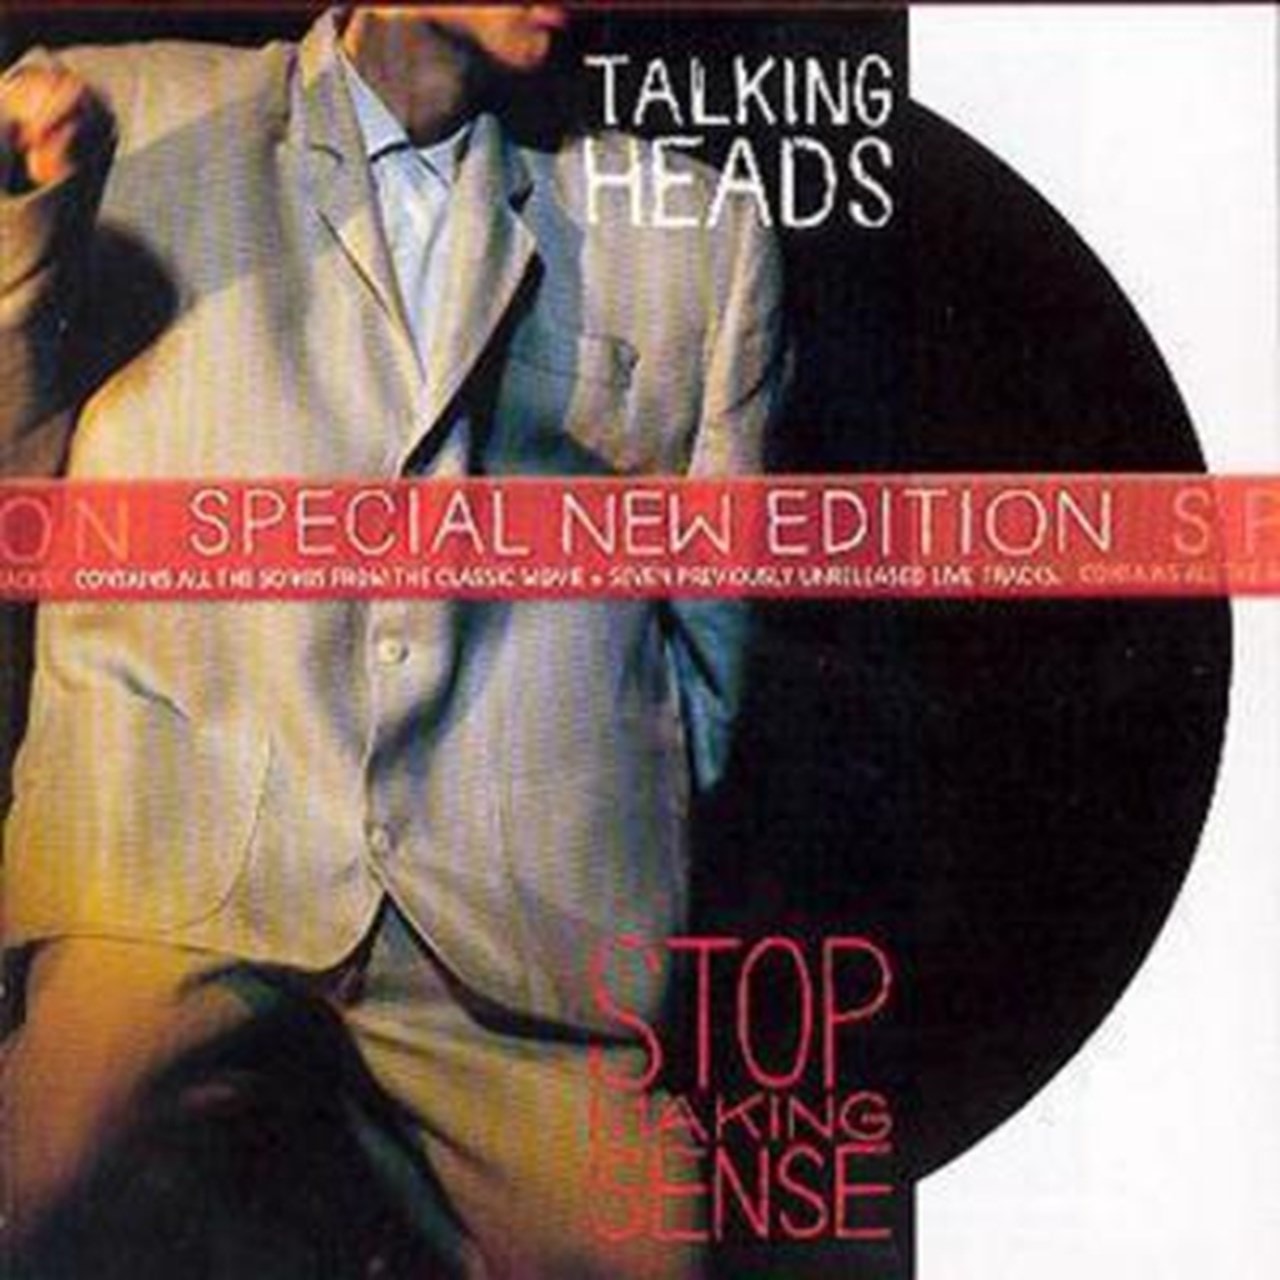 Stop Making Sense 15th Anniversary Edition CD Album Free shipping